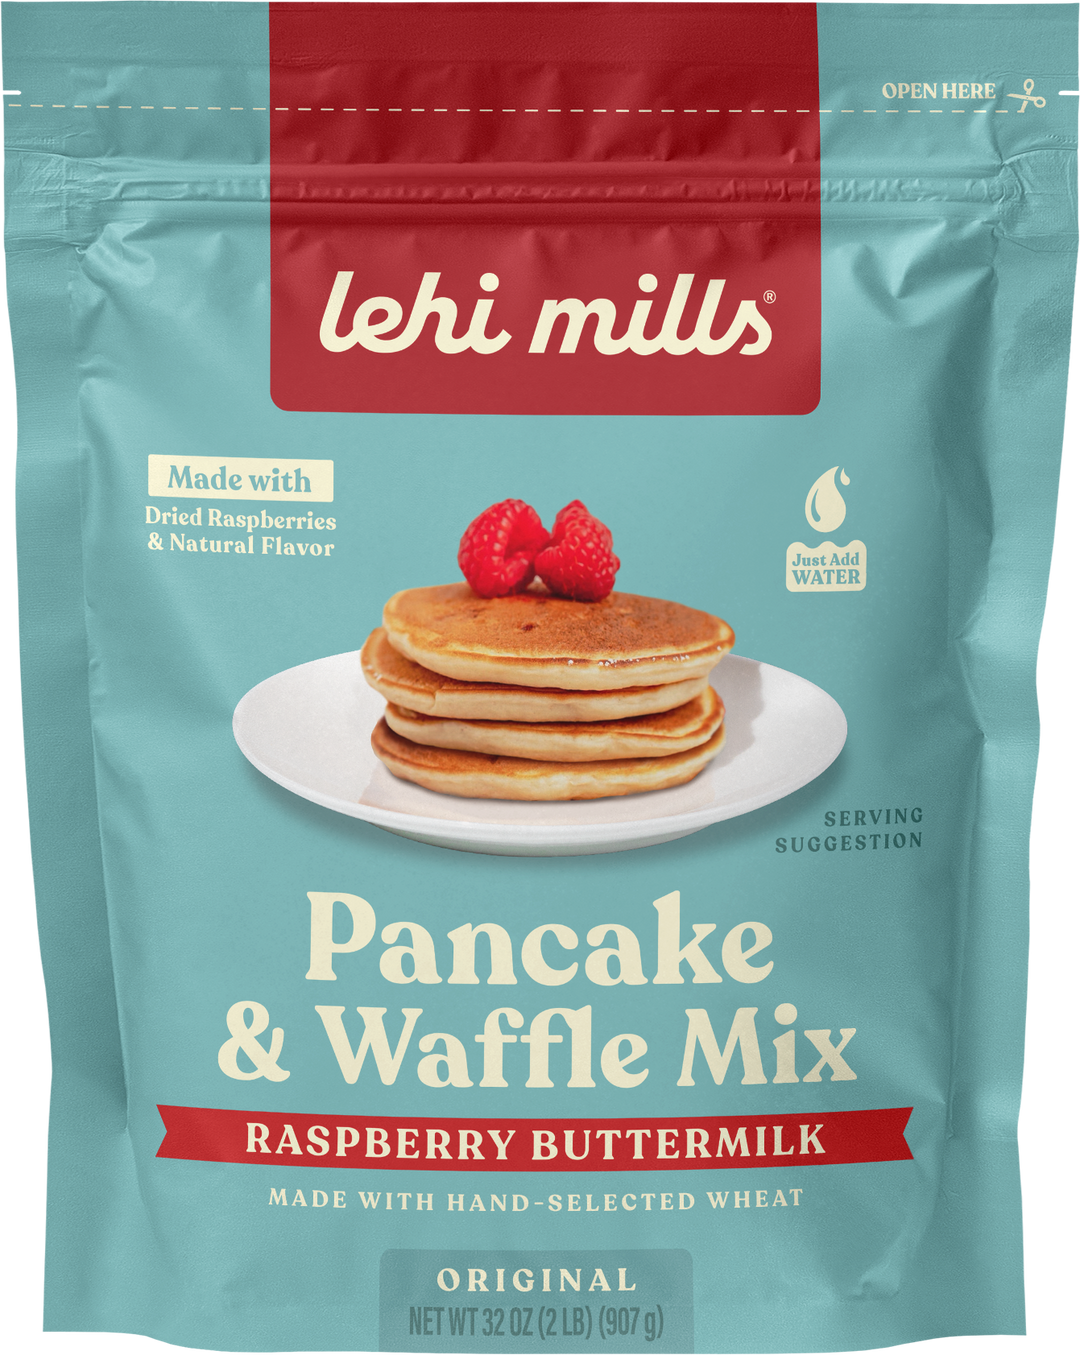 Raspberry Buttermilk Pancake & Waffle Mix